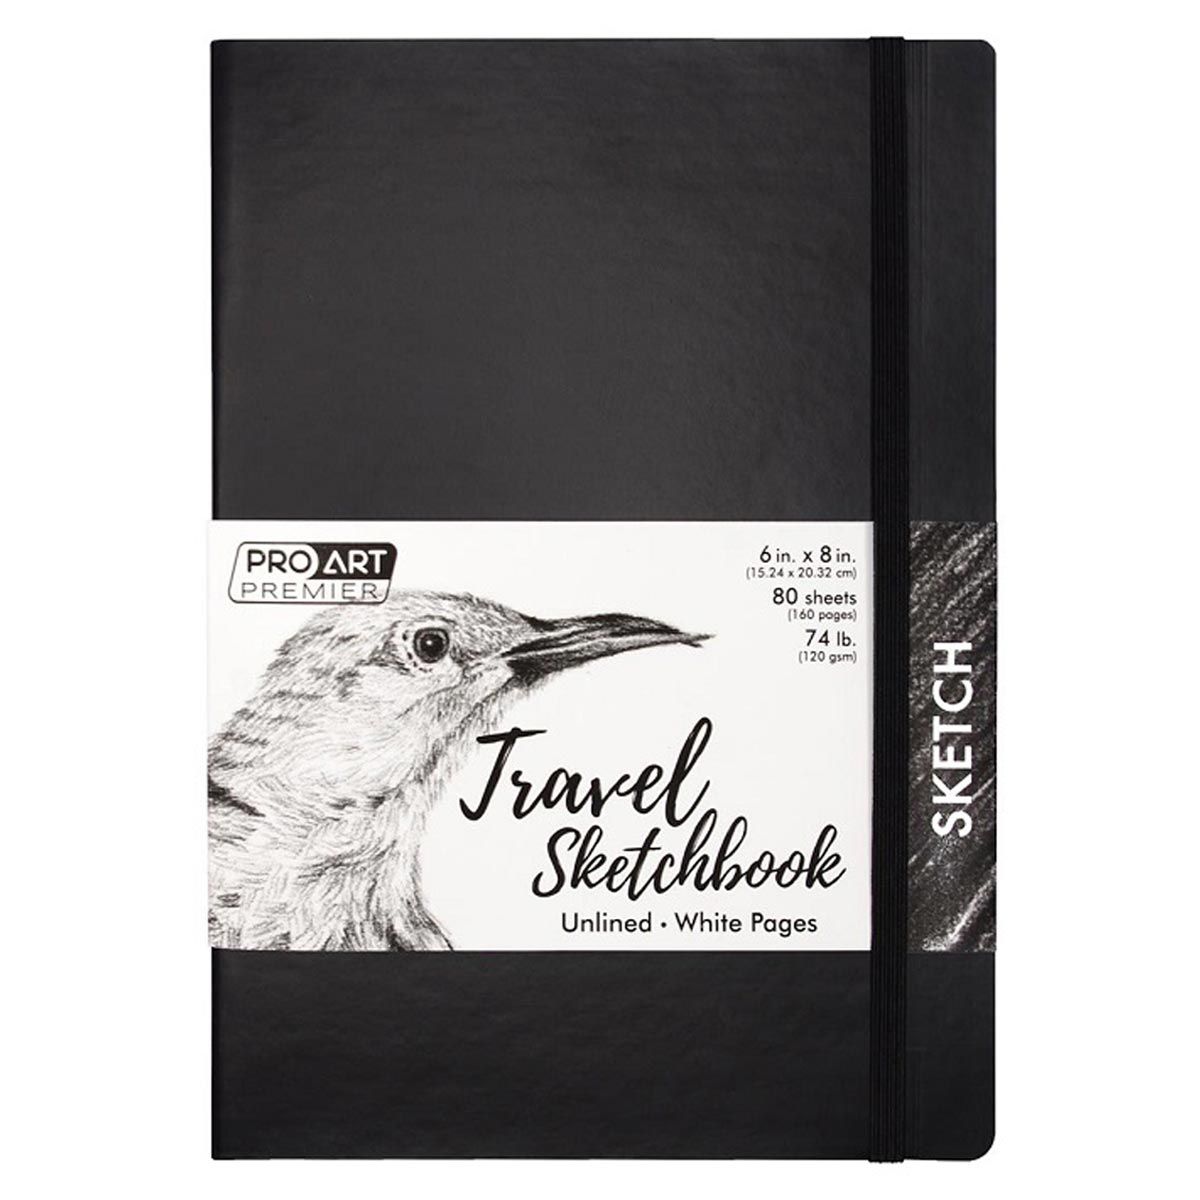 Pro Art Premier Travel Sketchbook, 6in x 8in, Black